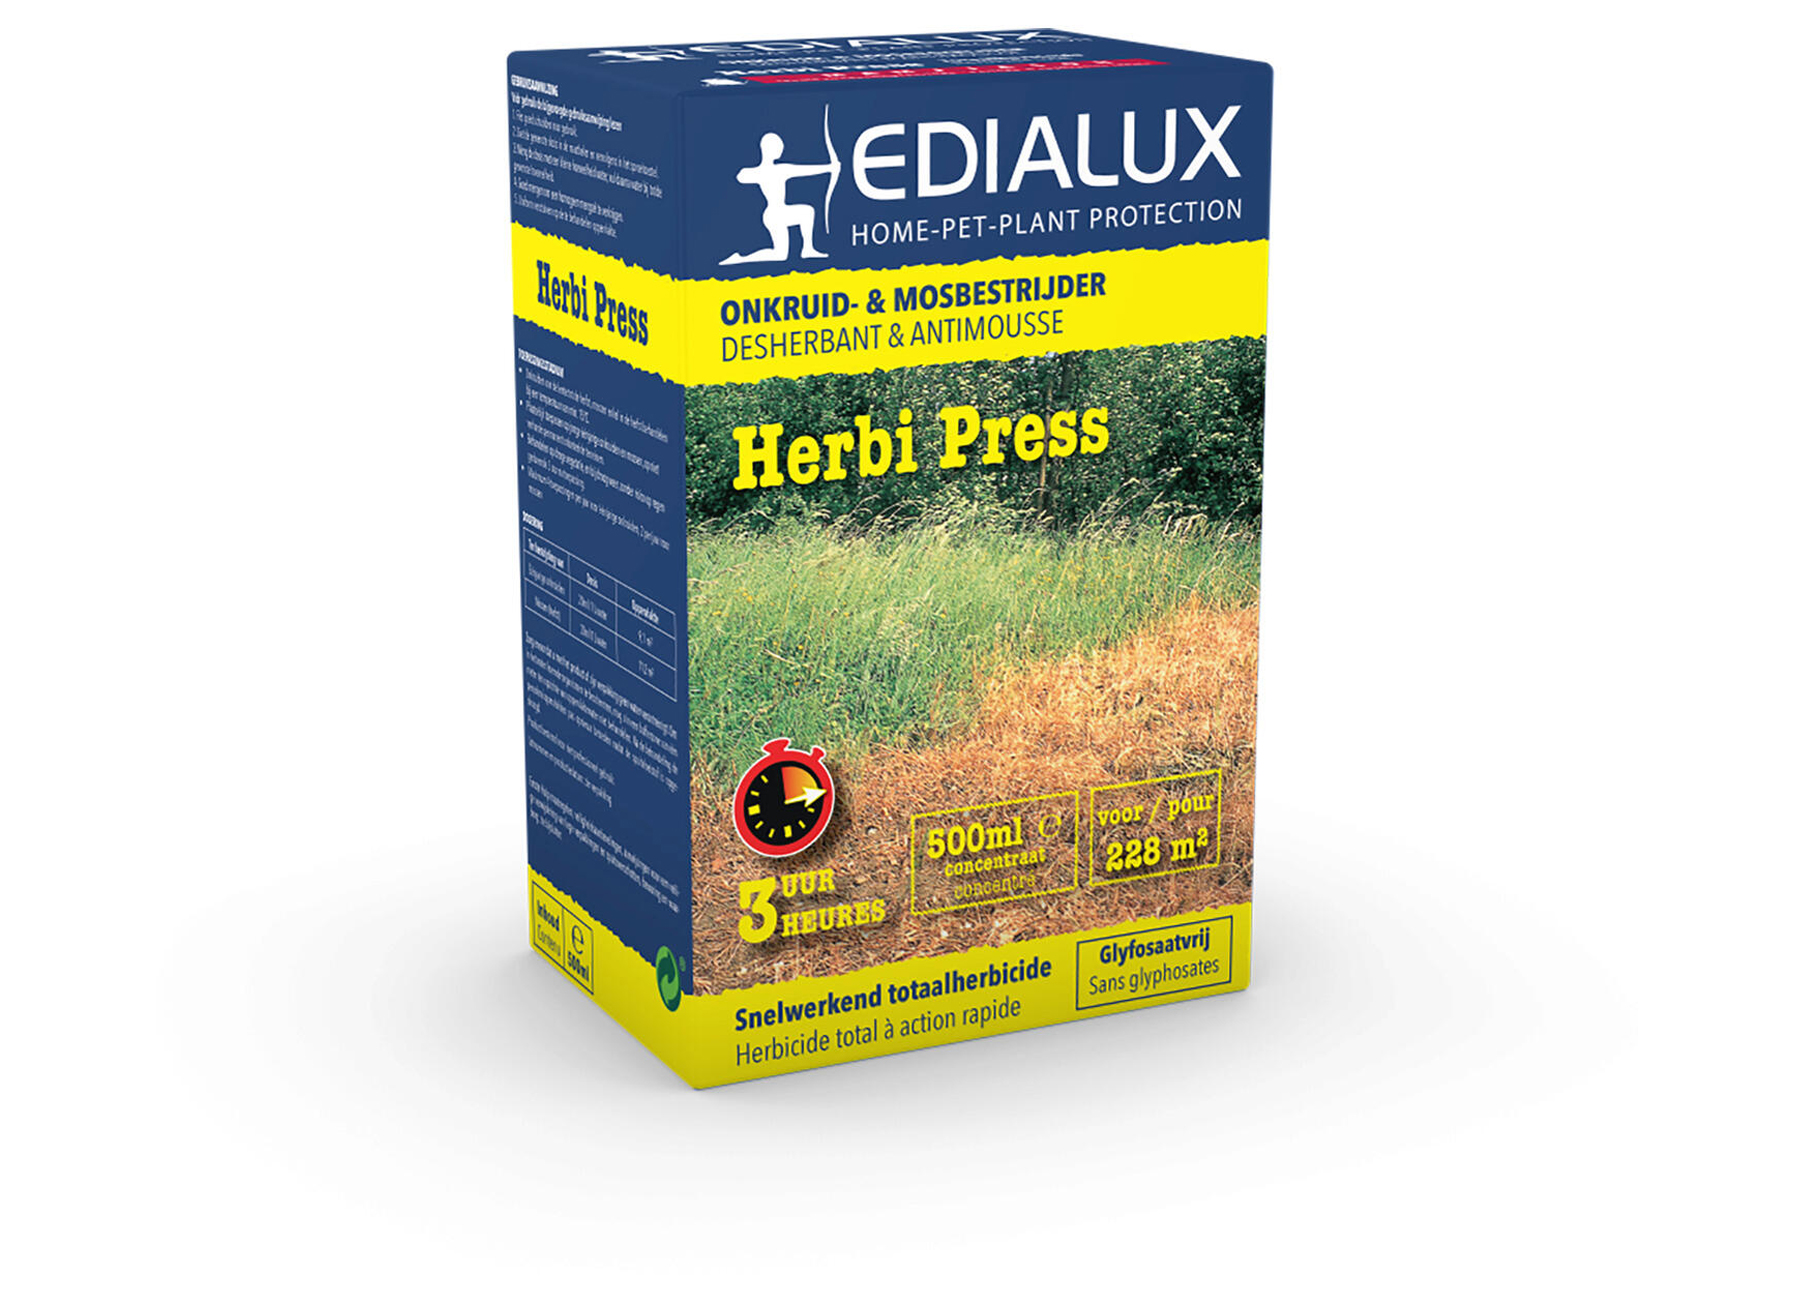 Edialux Herbi Press Desherbant Total 500ml - jardin - semences